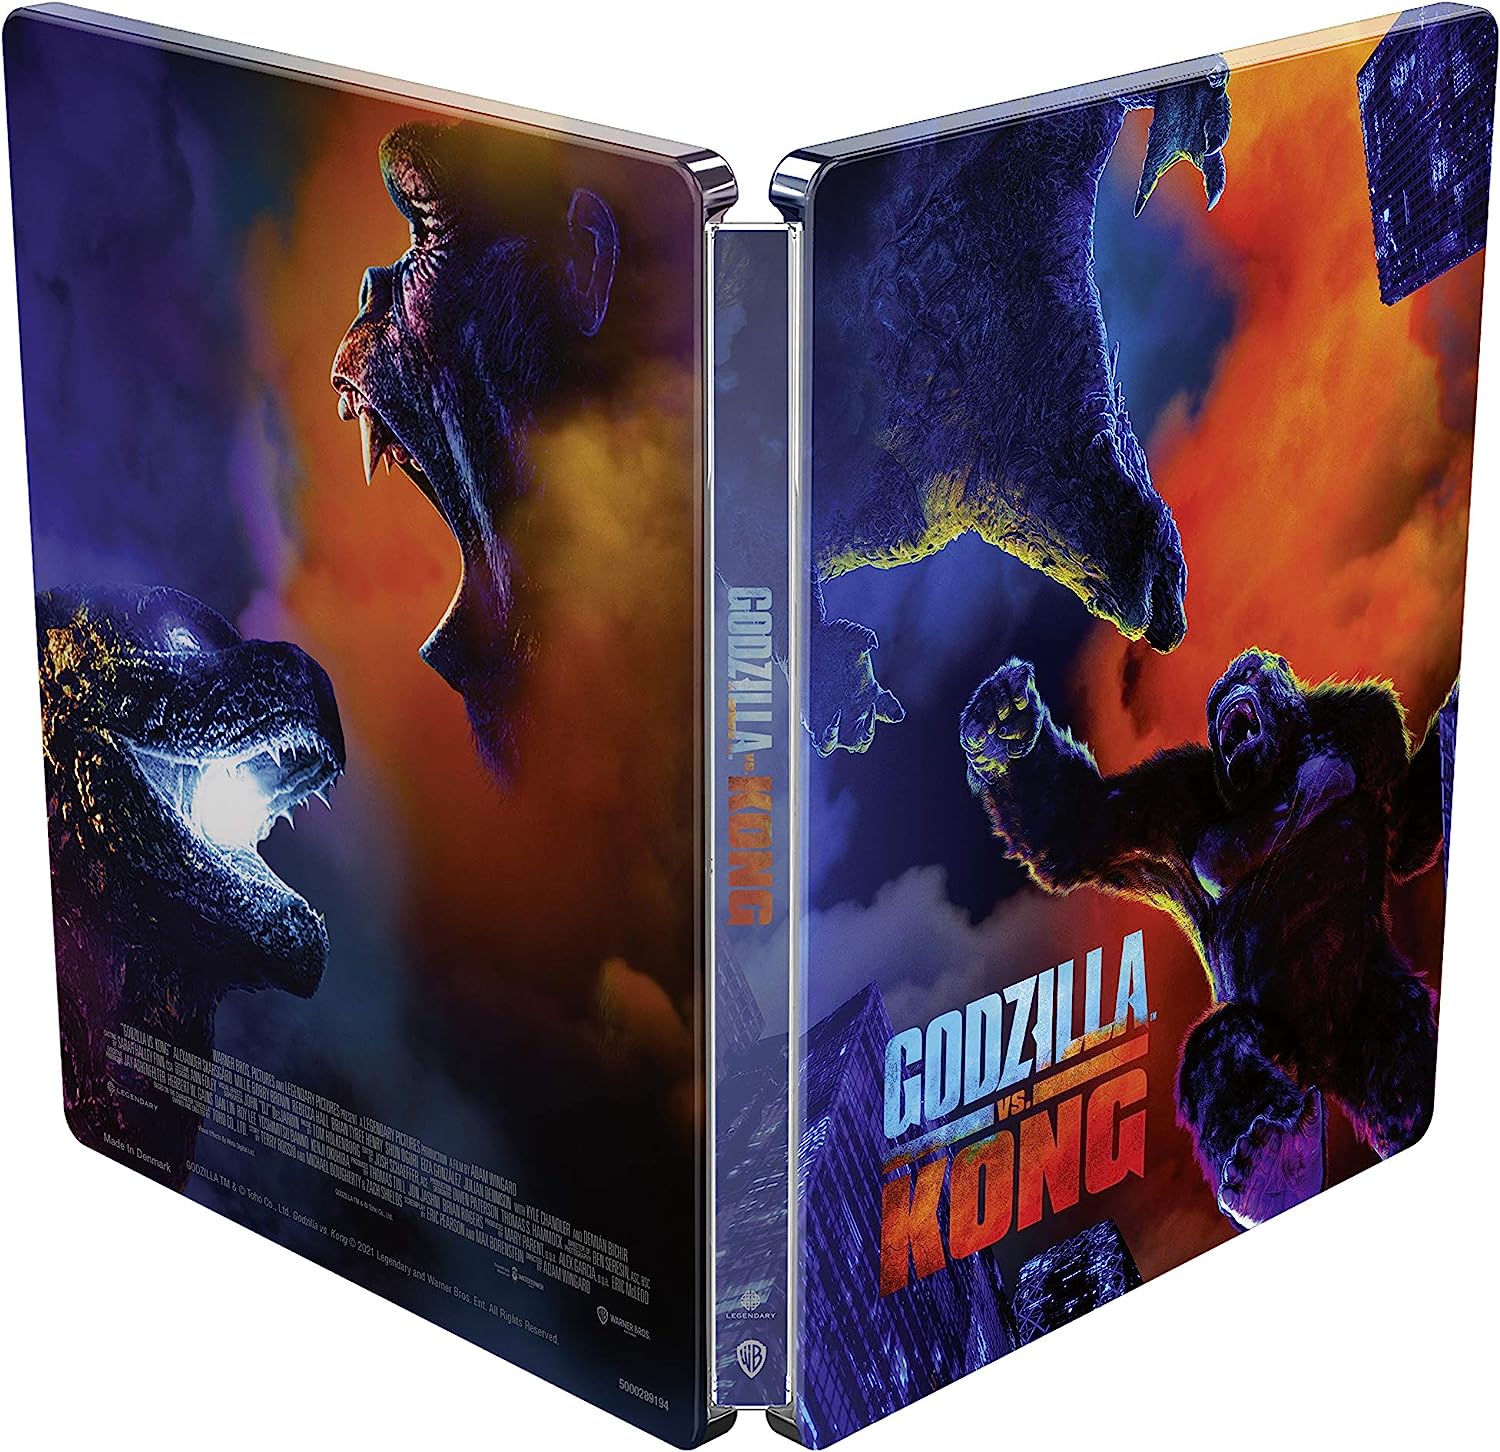 Годзилла против Конга (2021) (англ. язык) (4K UHD + Blu-ray) Steelbook